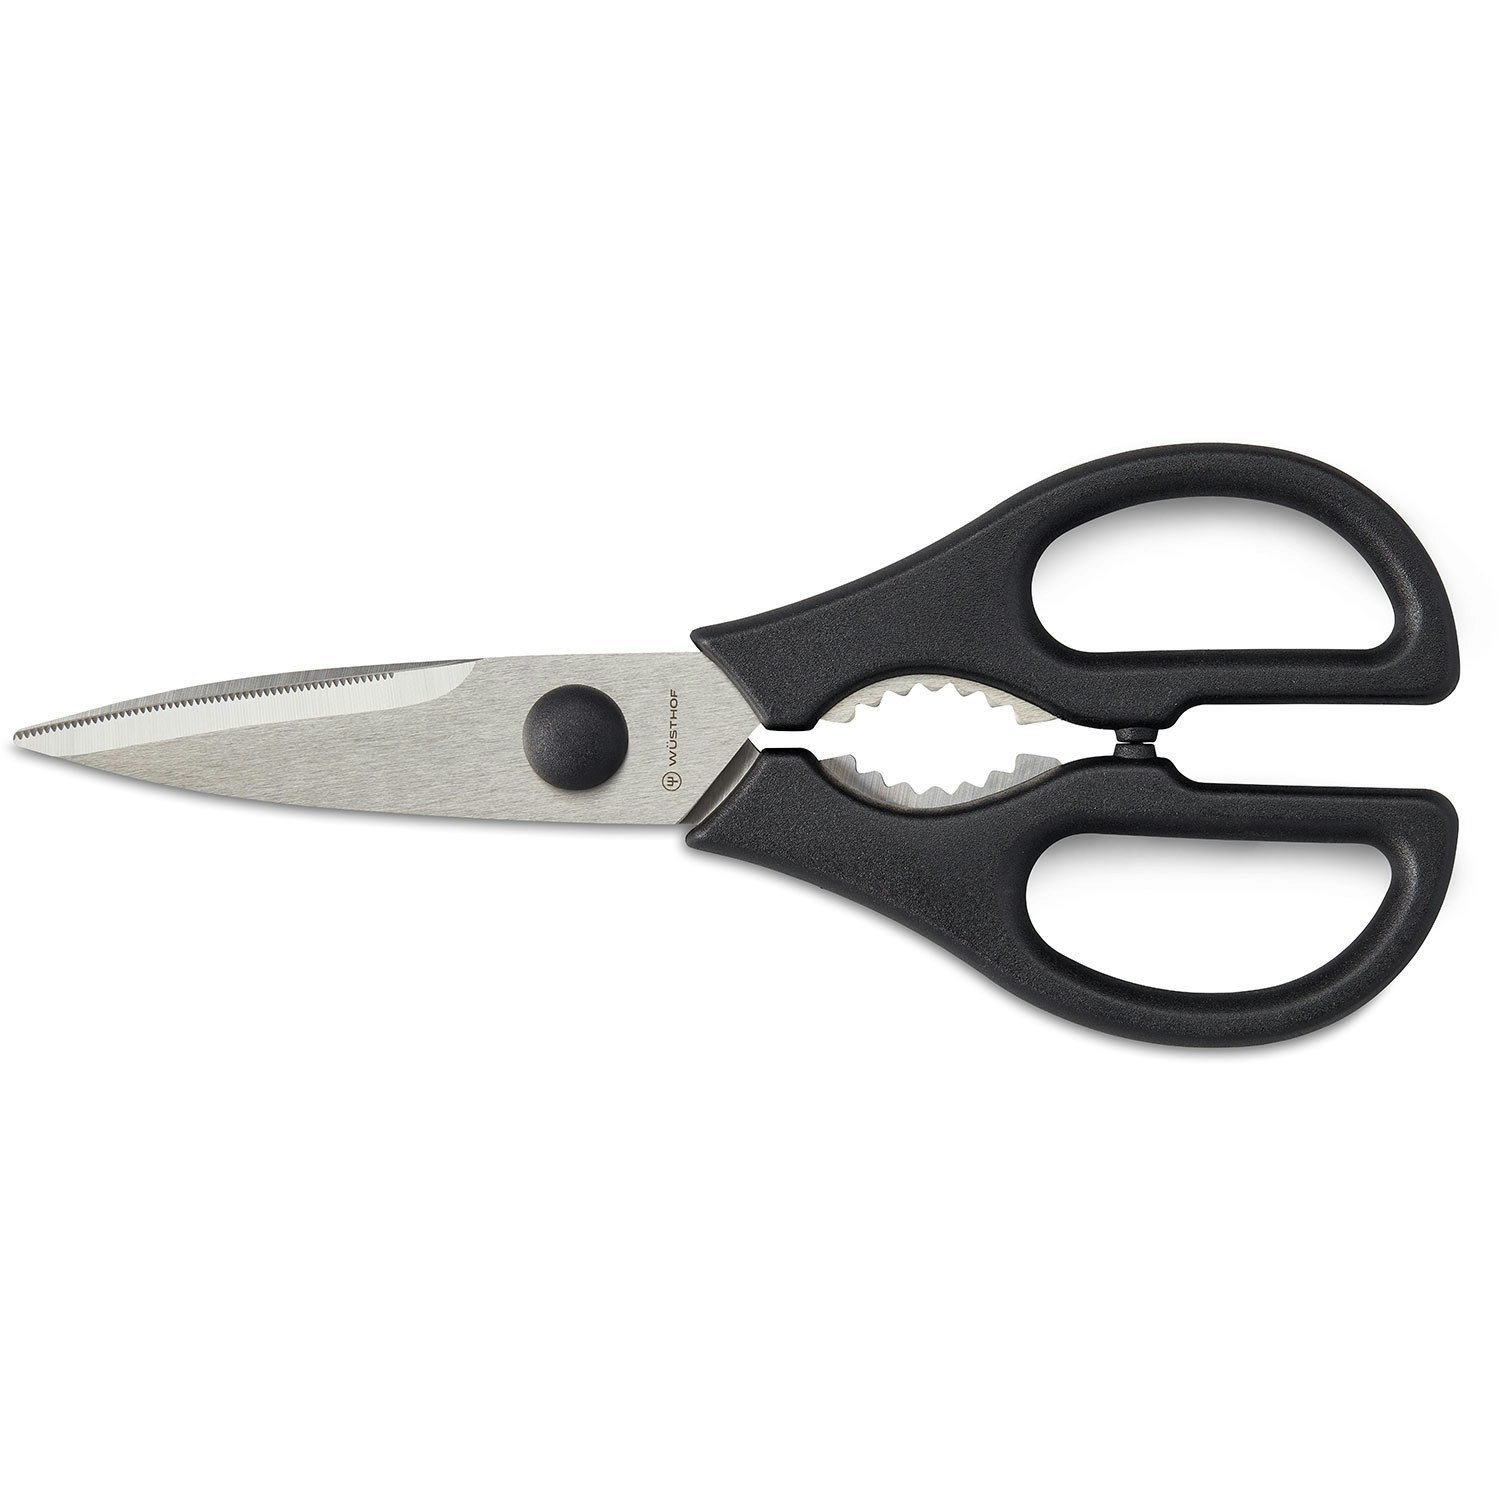 https://royaldesign.com/image/11/wusthof-kitchen-scissors-21-cm-black-0